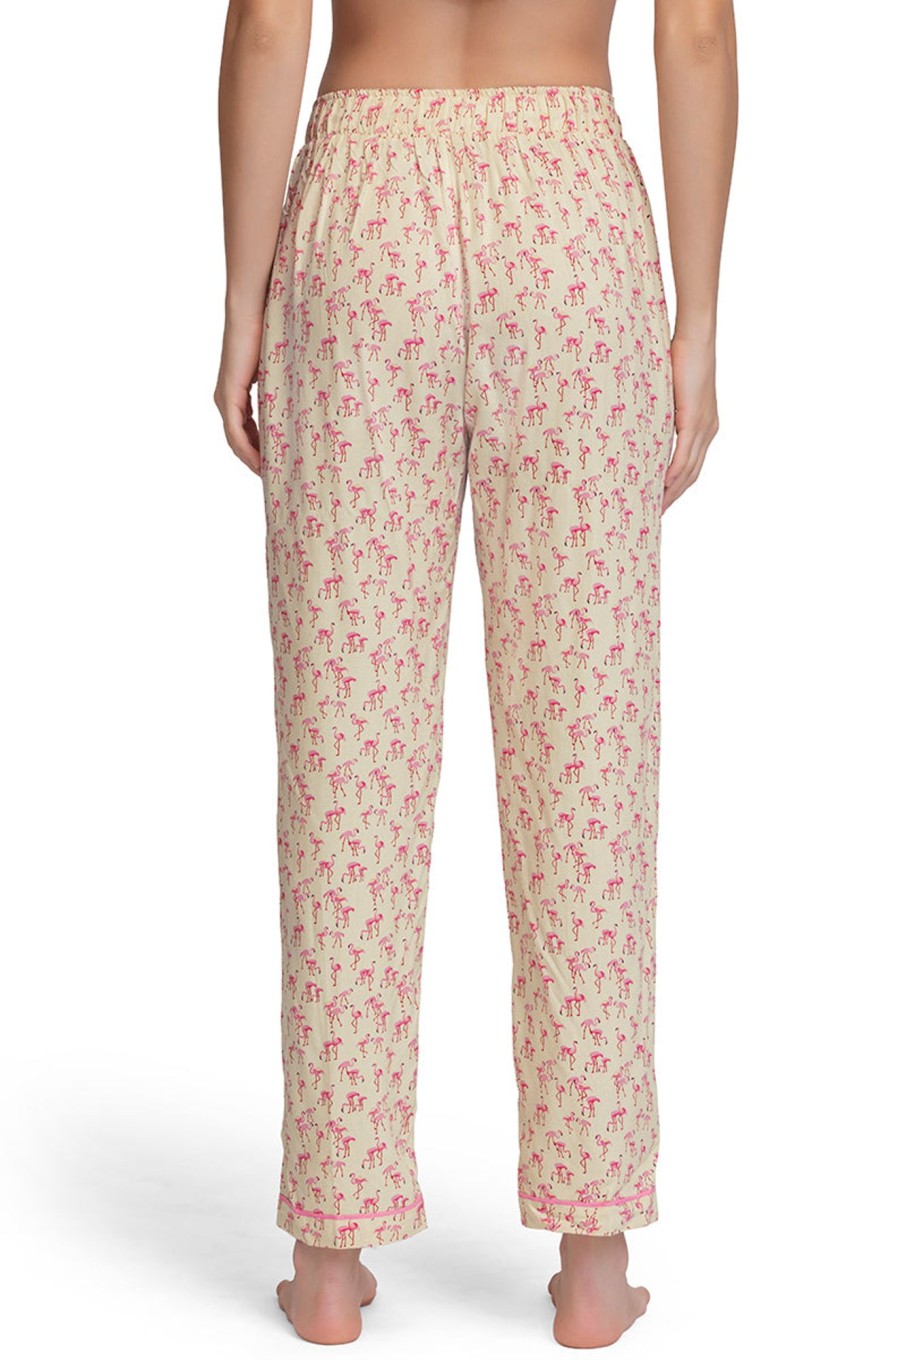 Capri Length Pyjama Bottom - Lemon Leaf Pr